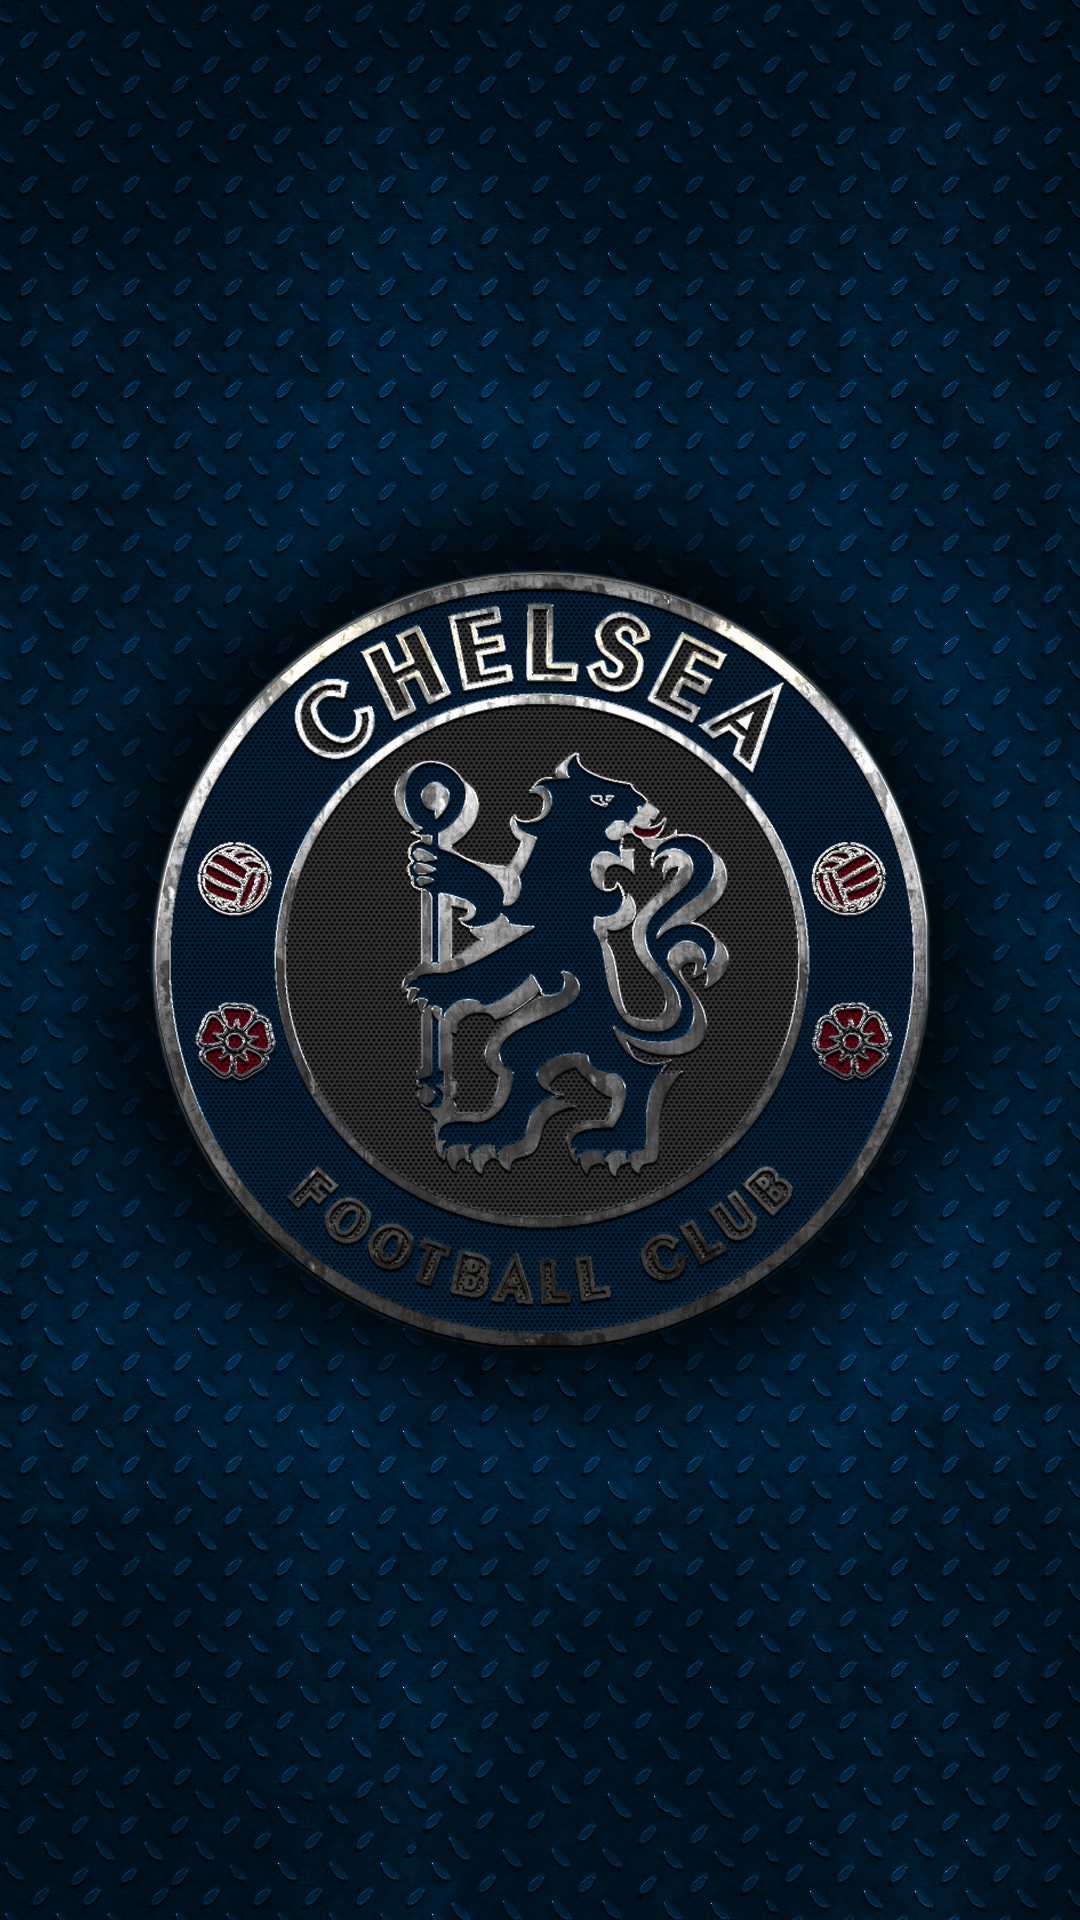 Chelsea: The Blues, Won the Premier League five times. 1080x1920 Full HD Background.